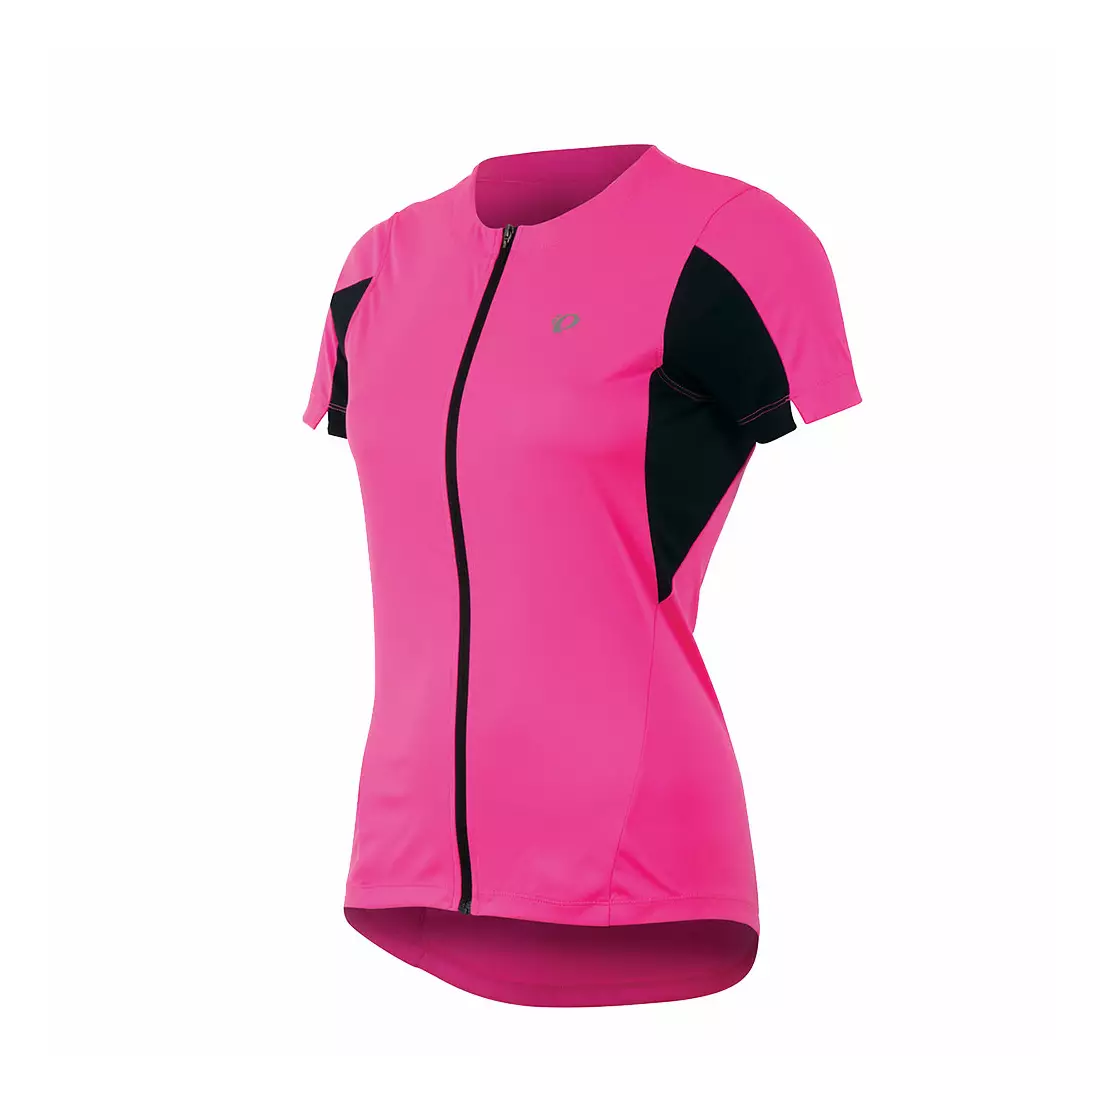 PEARL IZUMI SELECT women's cycling jersey 11221502-4SS